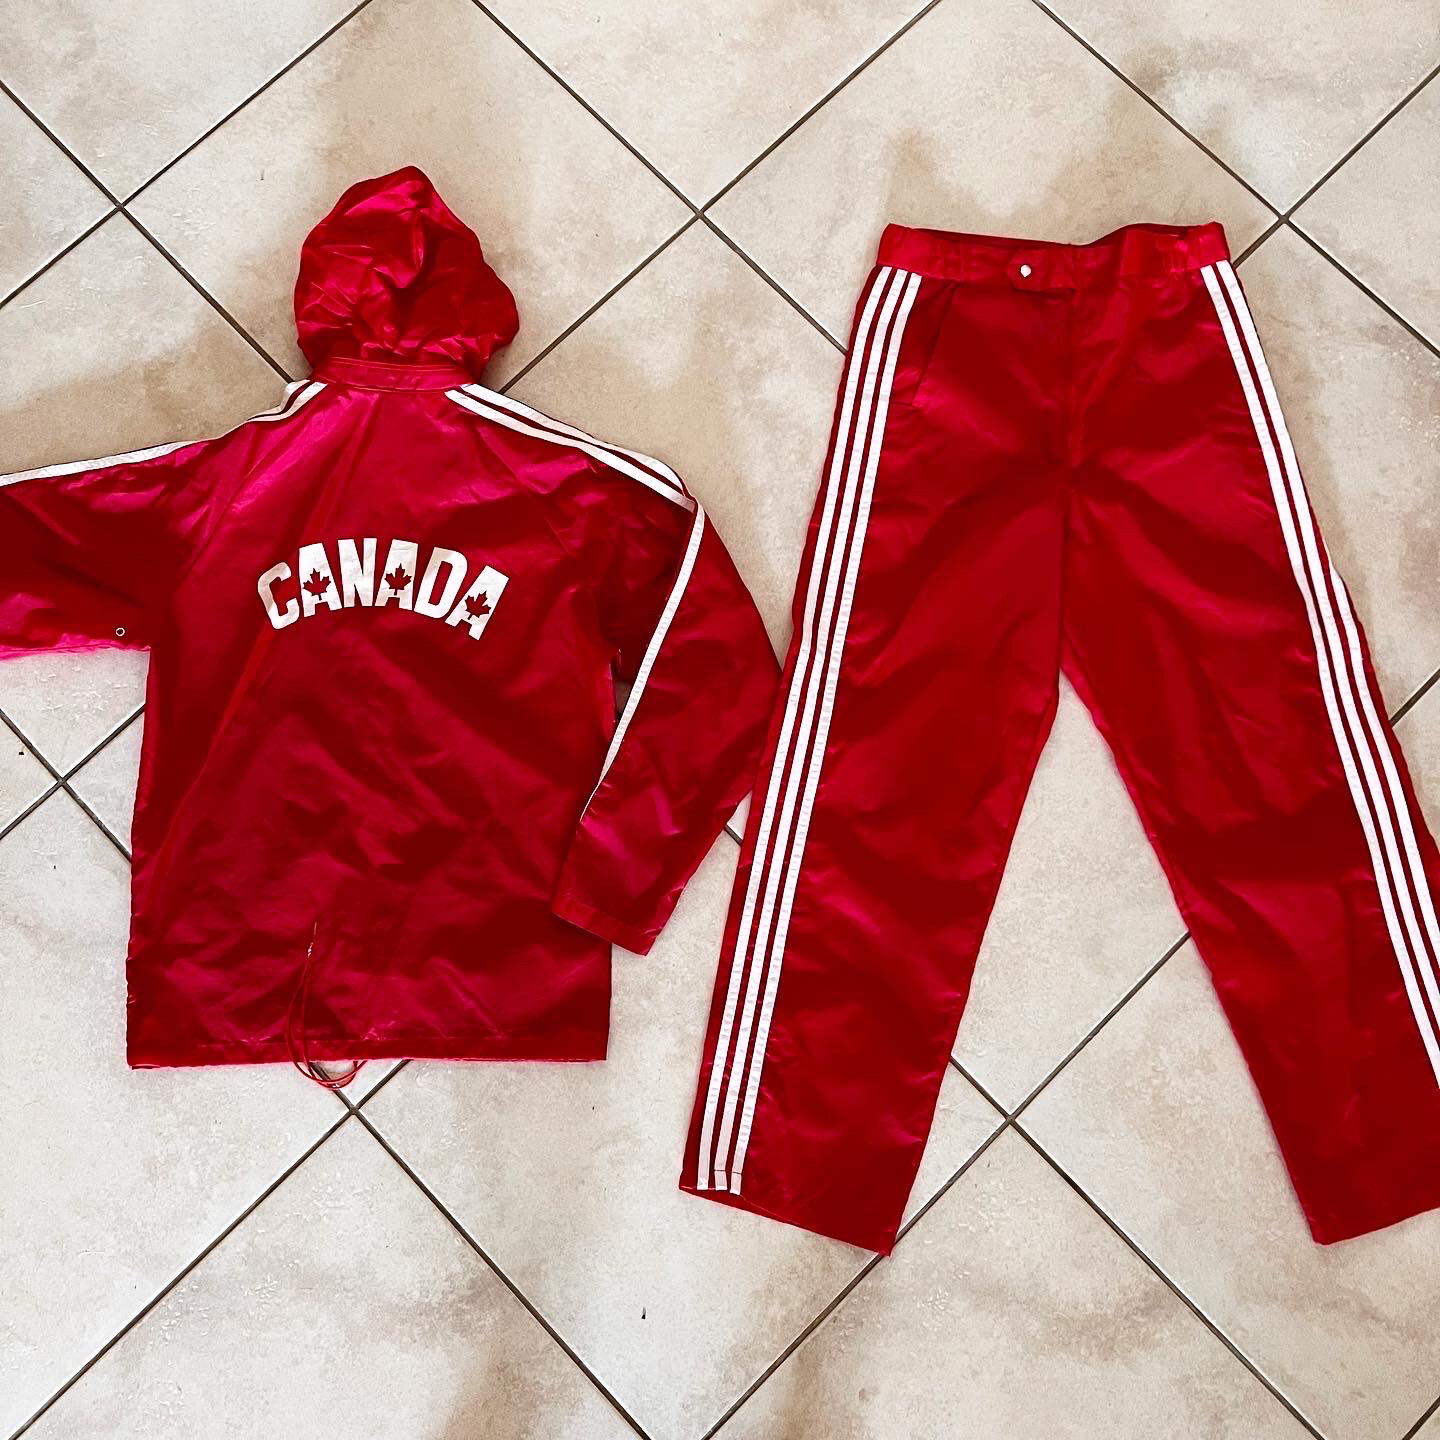 Vintage adidas Canada Olympic Team Track Suit